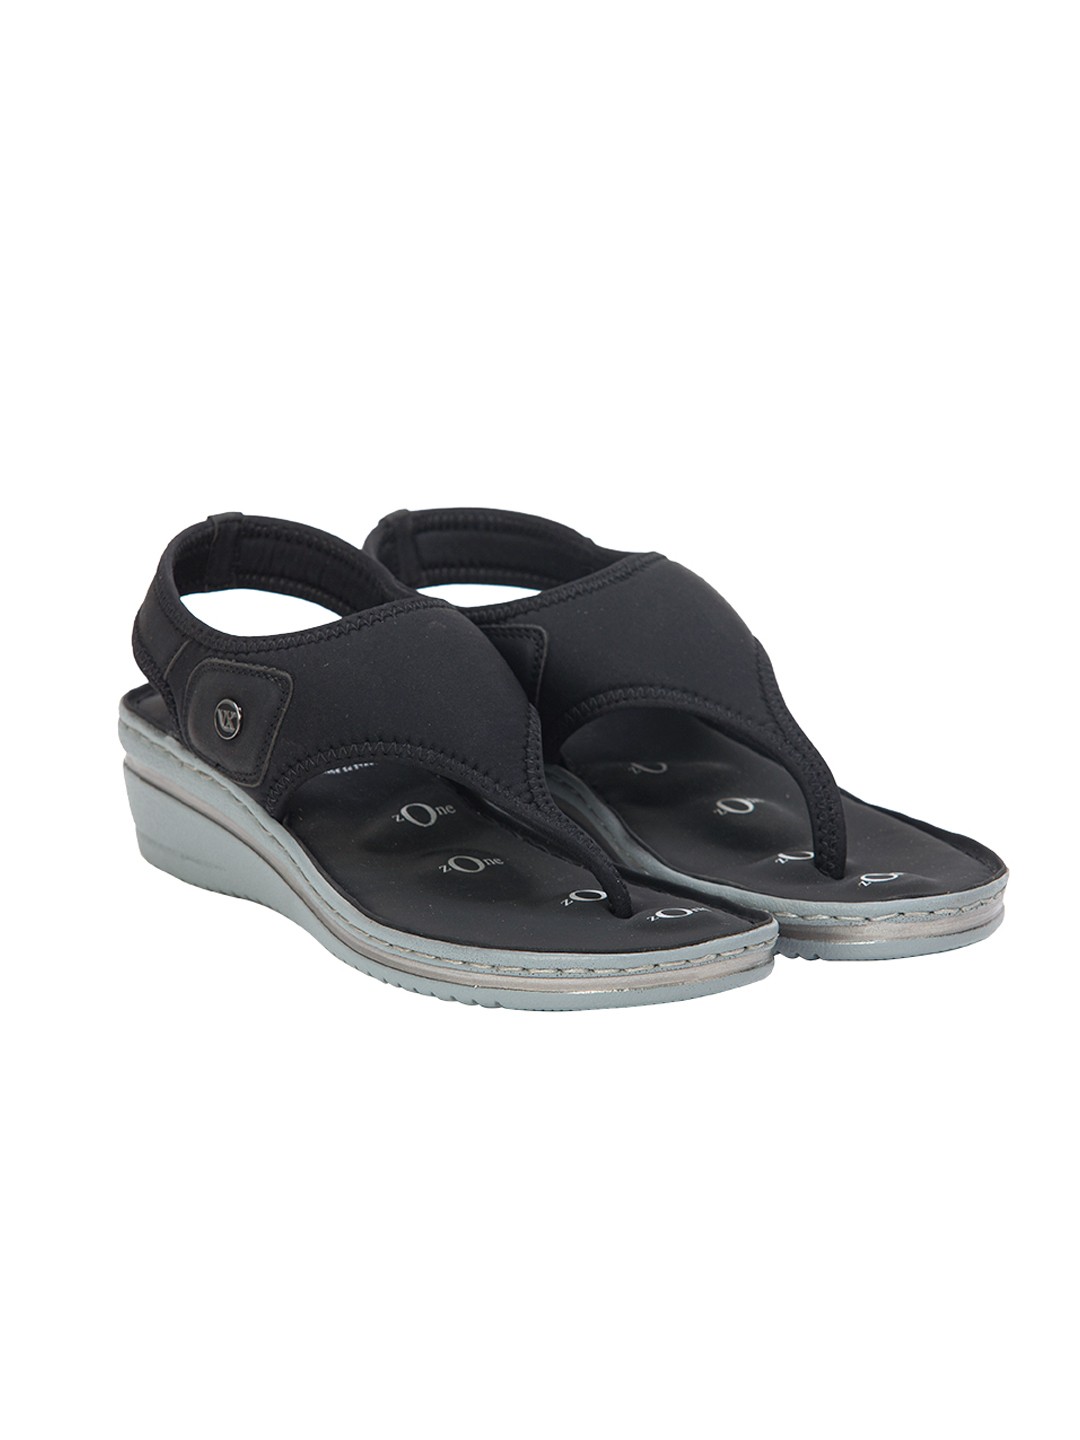 Buy Von Wellx Germany Comfort Della Black Sandals Online in Varanasi